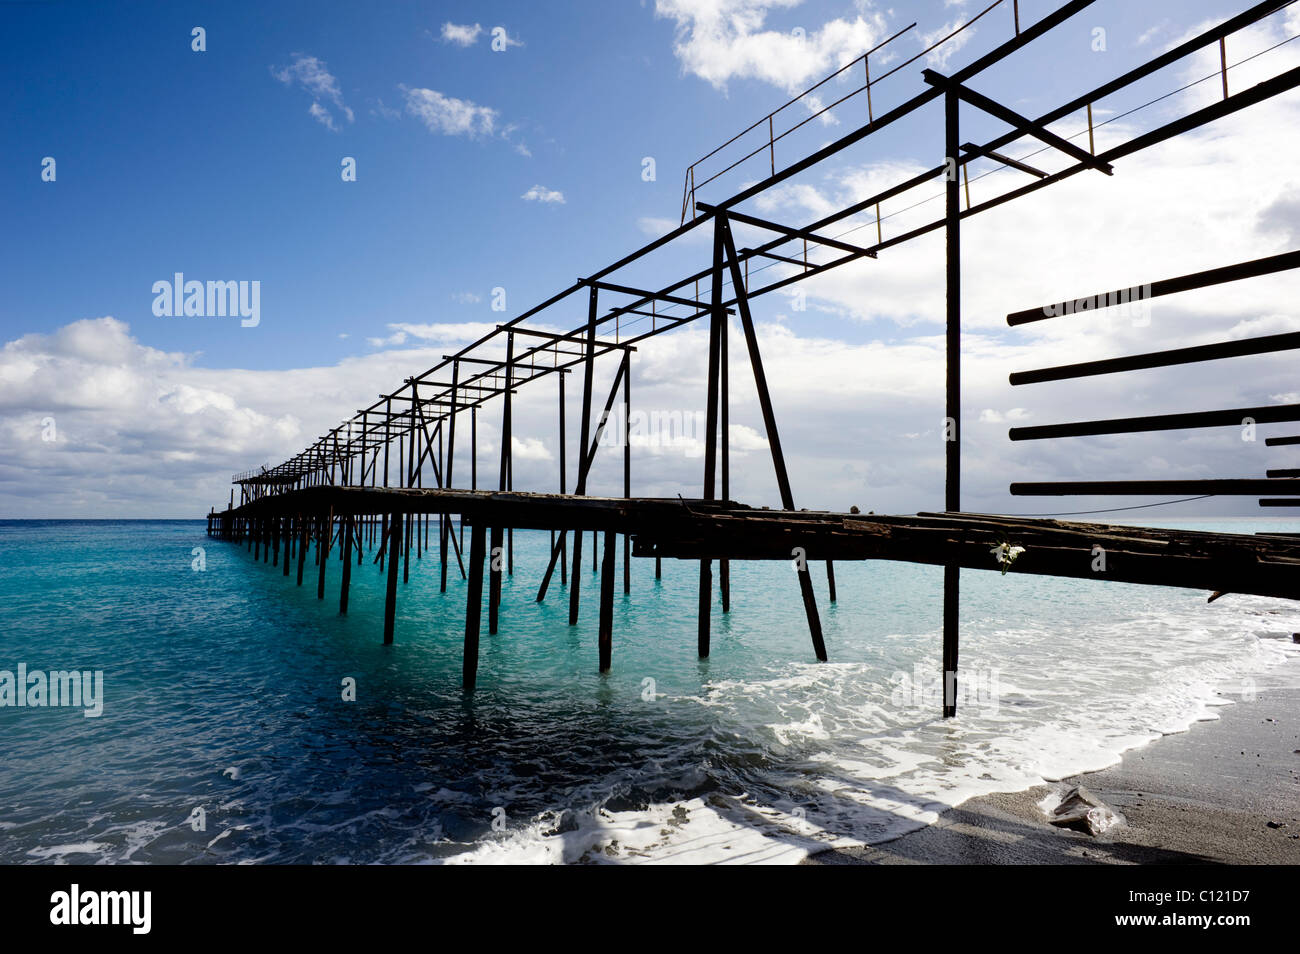 Old loading bridge, turquoise sea caused by pumice sediments on the seabed on Lipari, Isola Eolie, Sicily, Italy, Europe Stock Photo